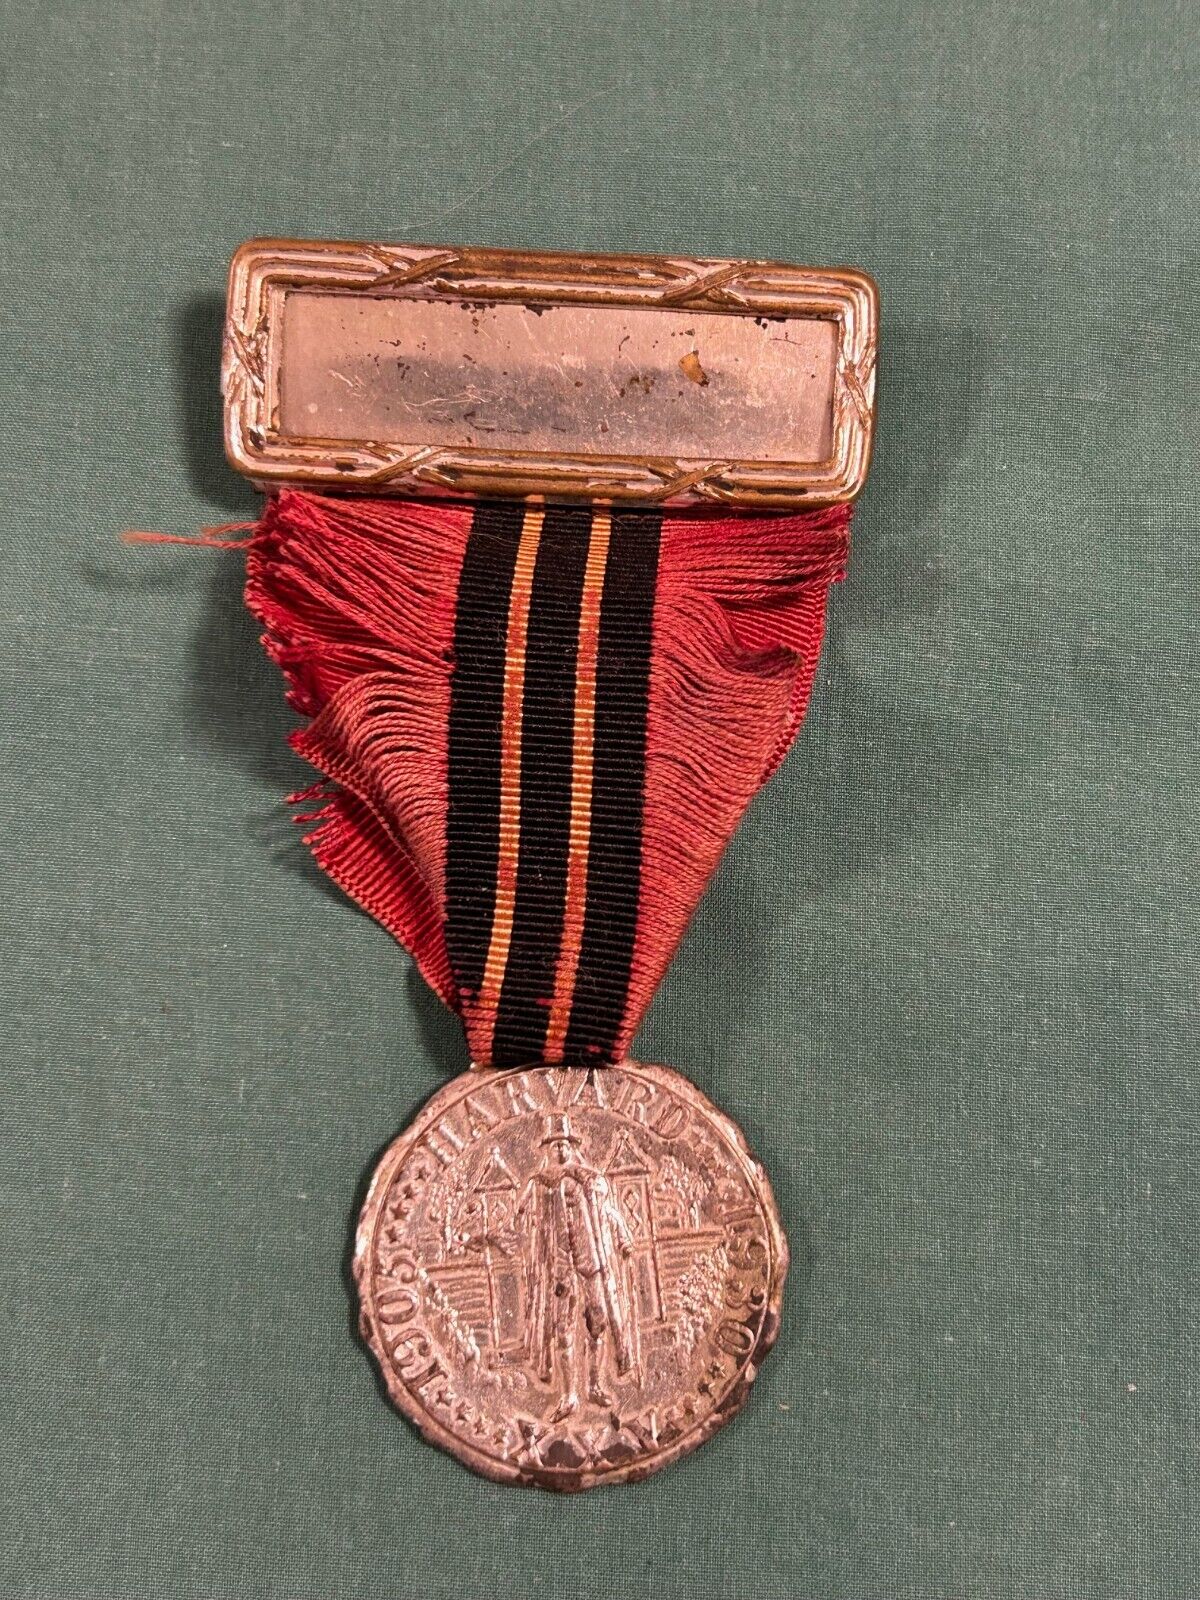 Harvard 1905 / 1930 Ribbon And Medallion, I Think Reunion